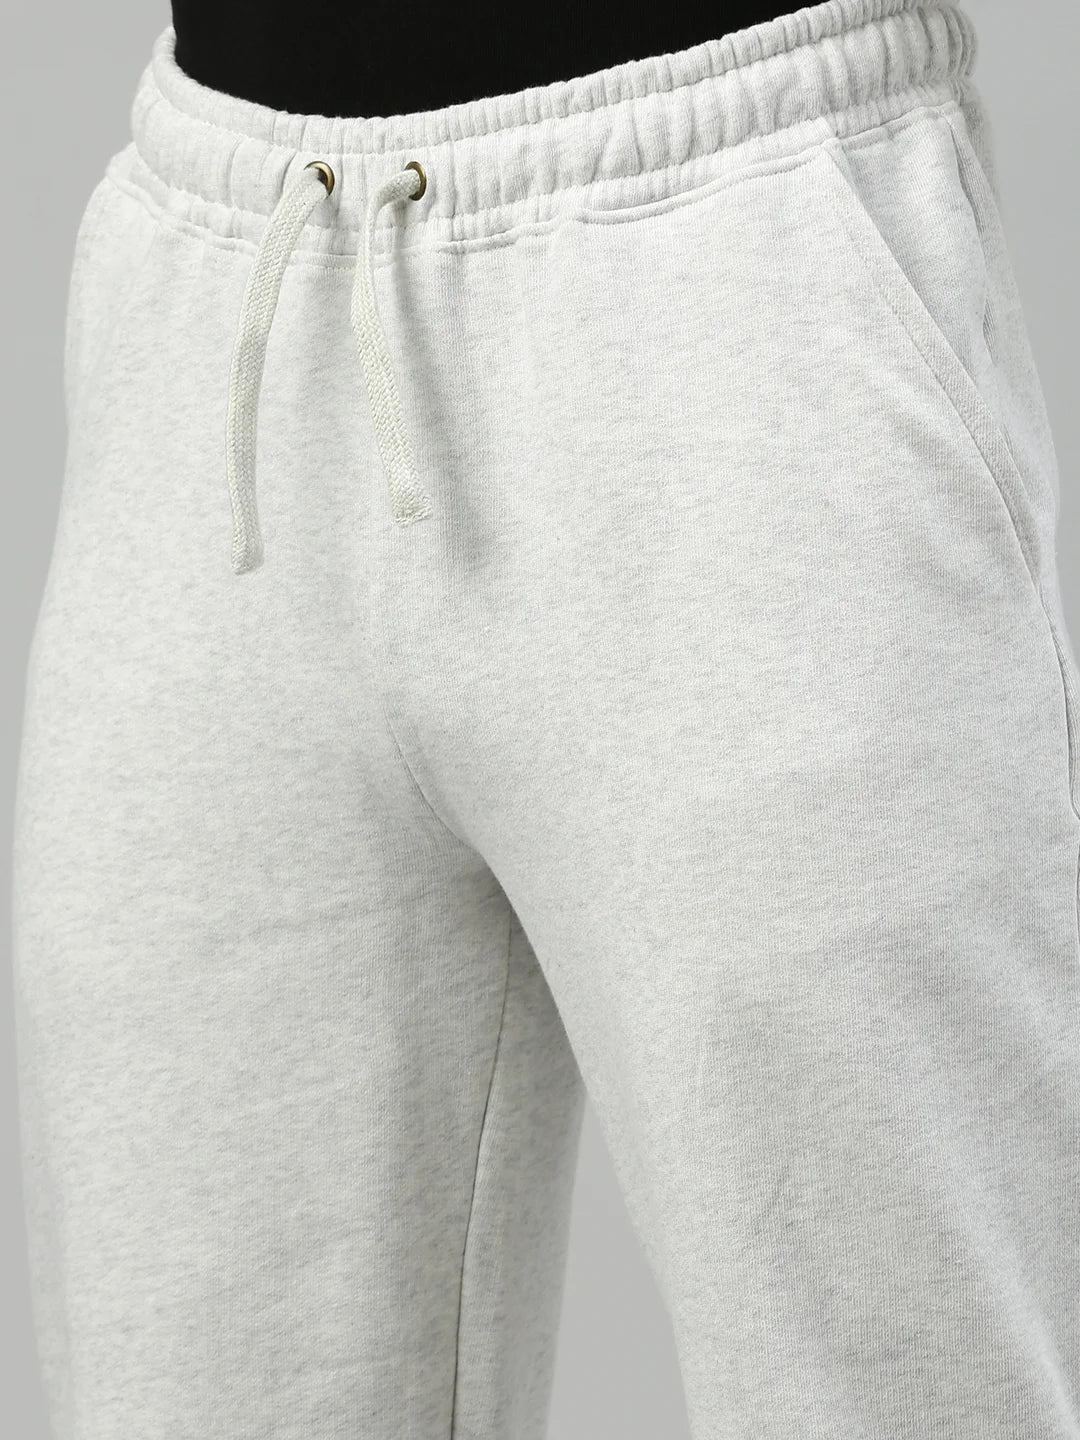 Men's jogging pants Jan 3501